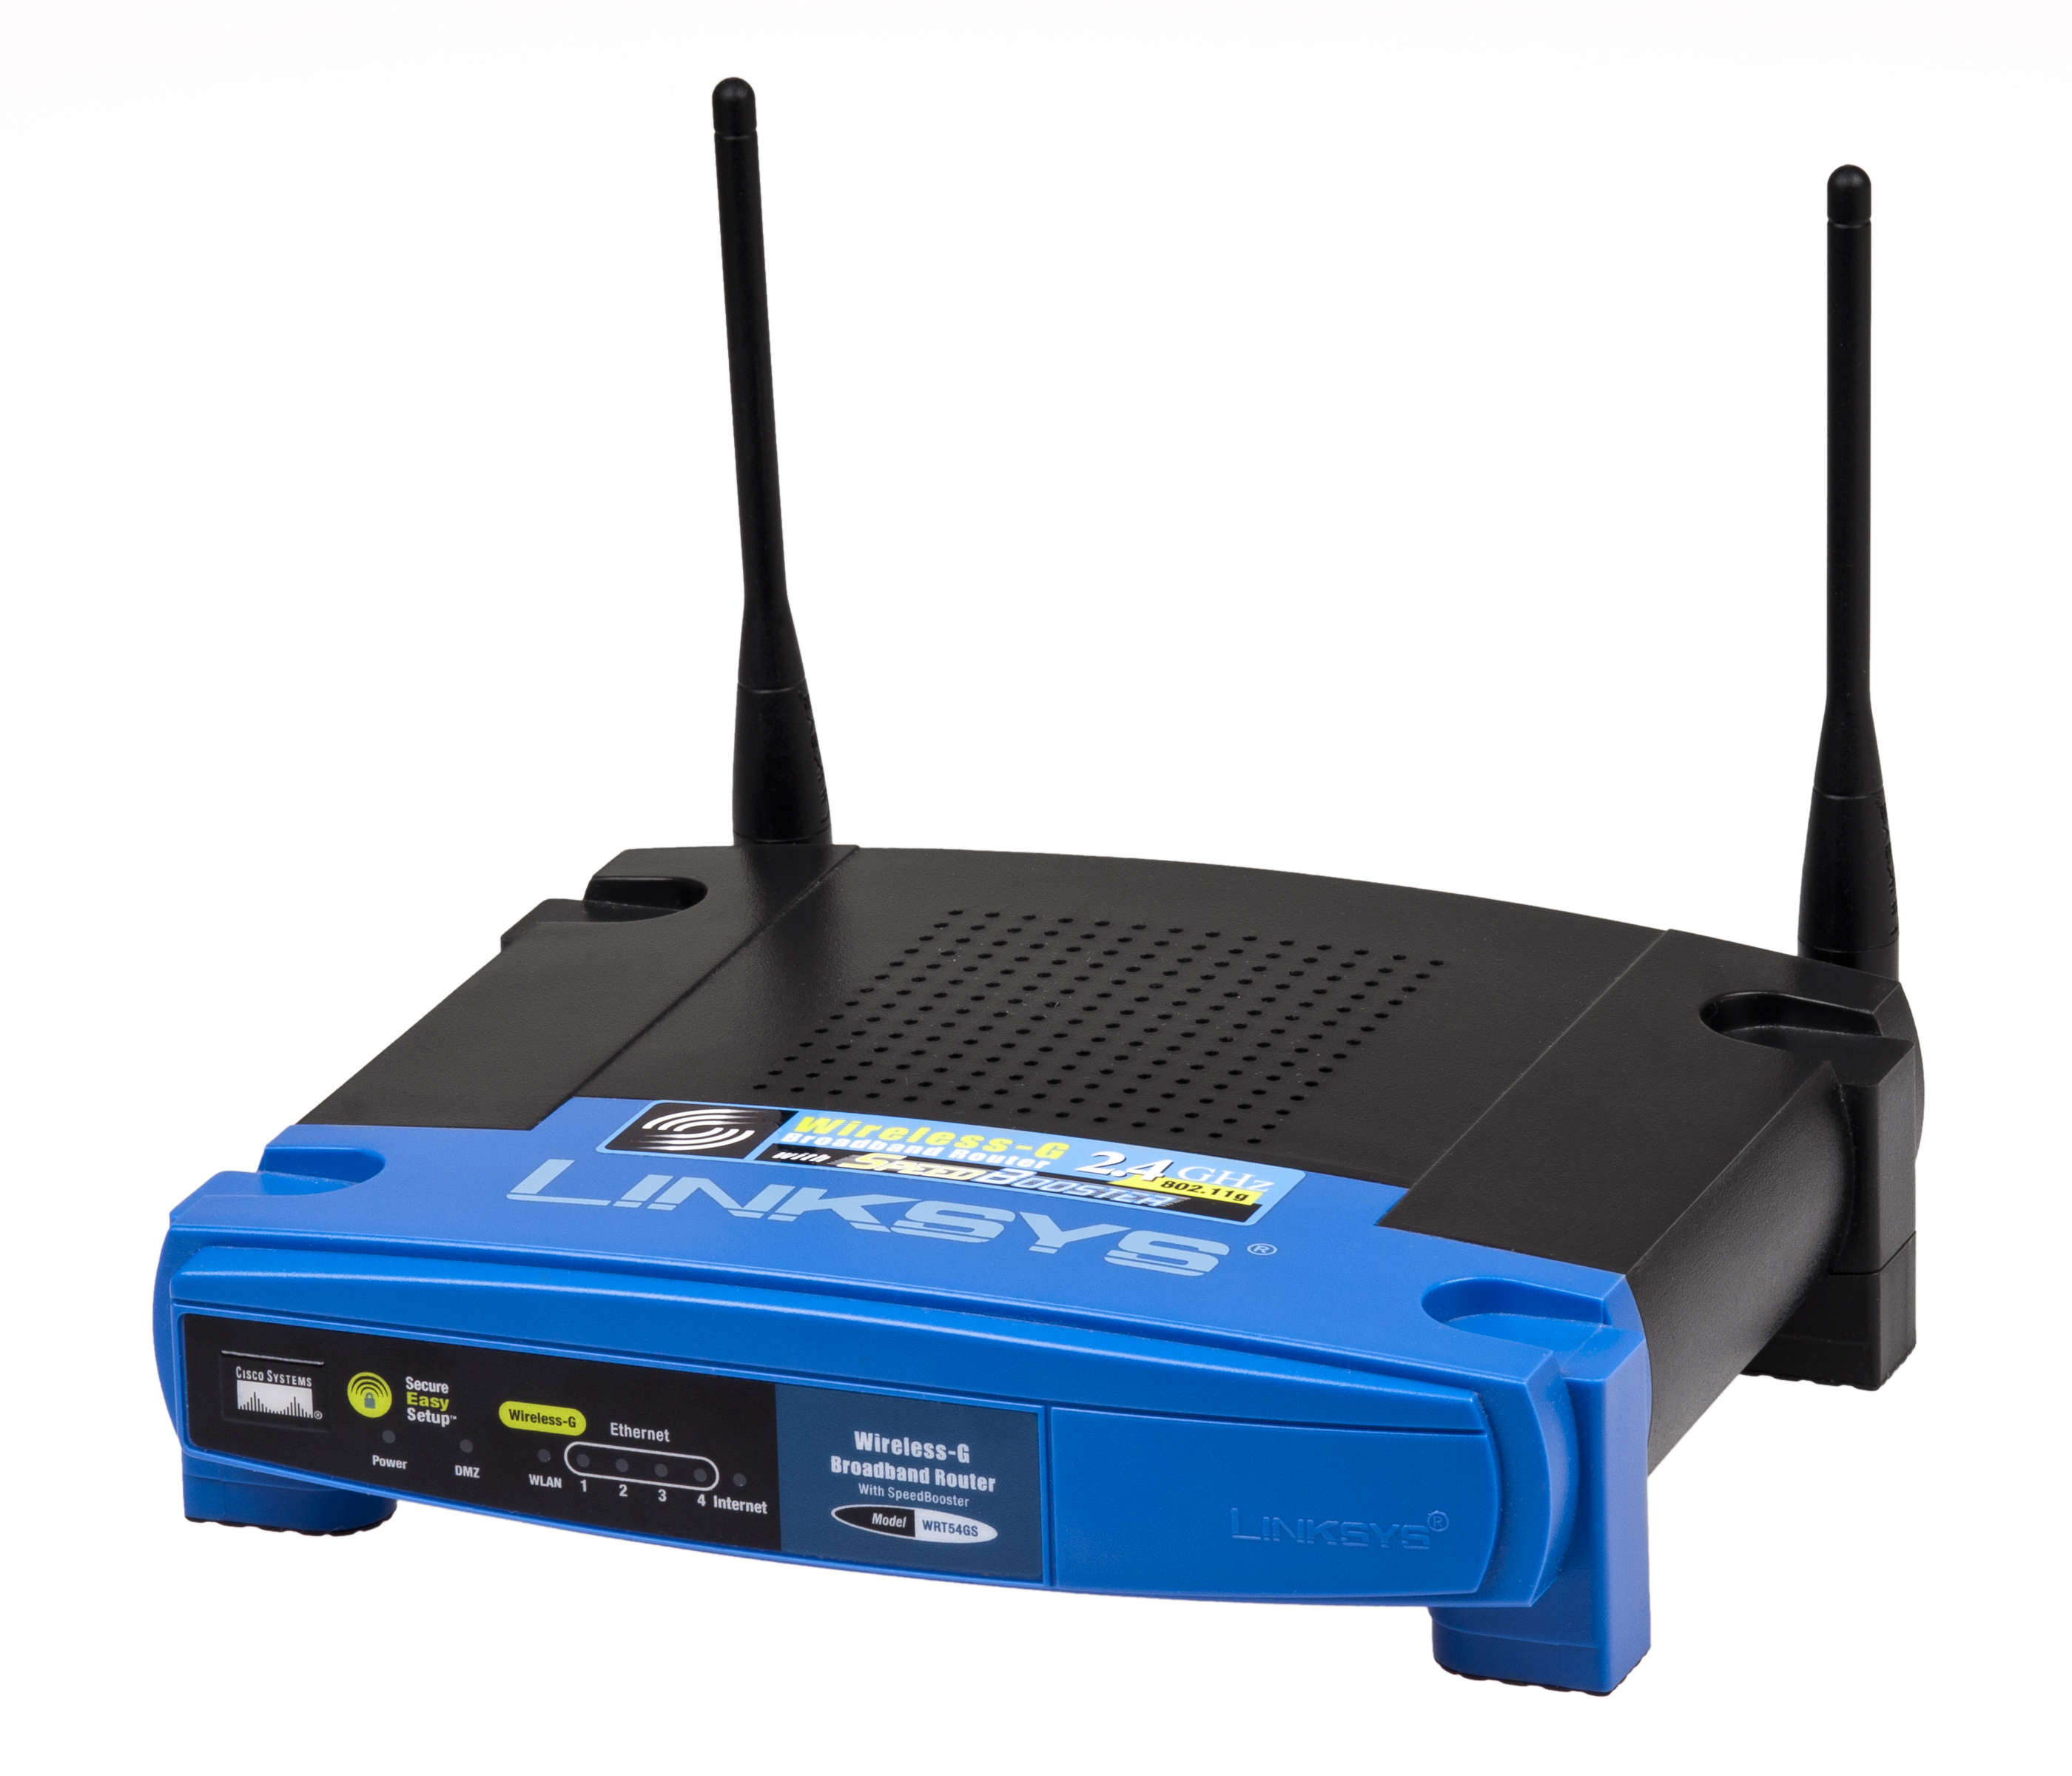 Router Linksys, dapat digunakan baik untuk Wi-Fi dan Ethernet/ist